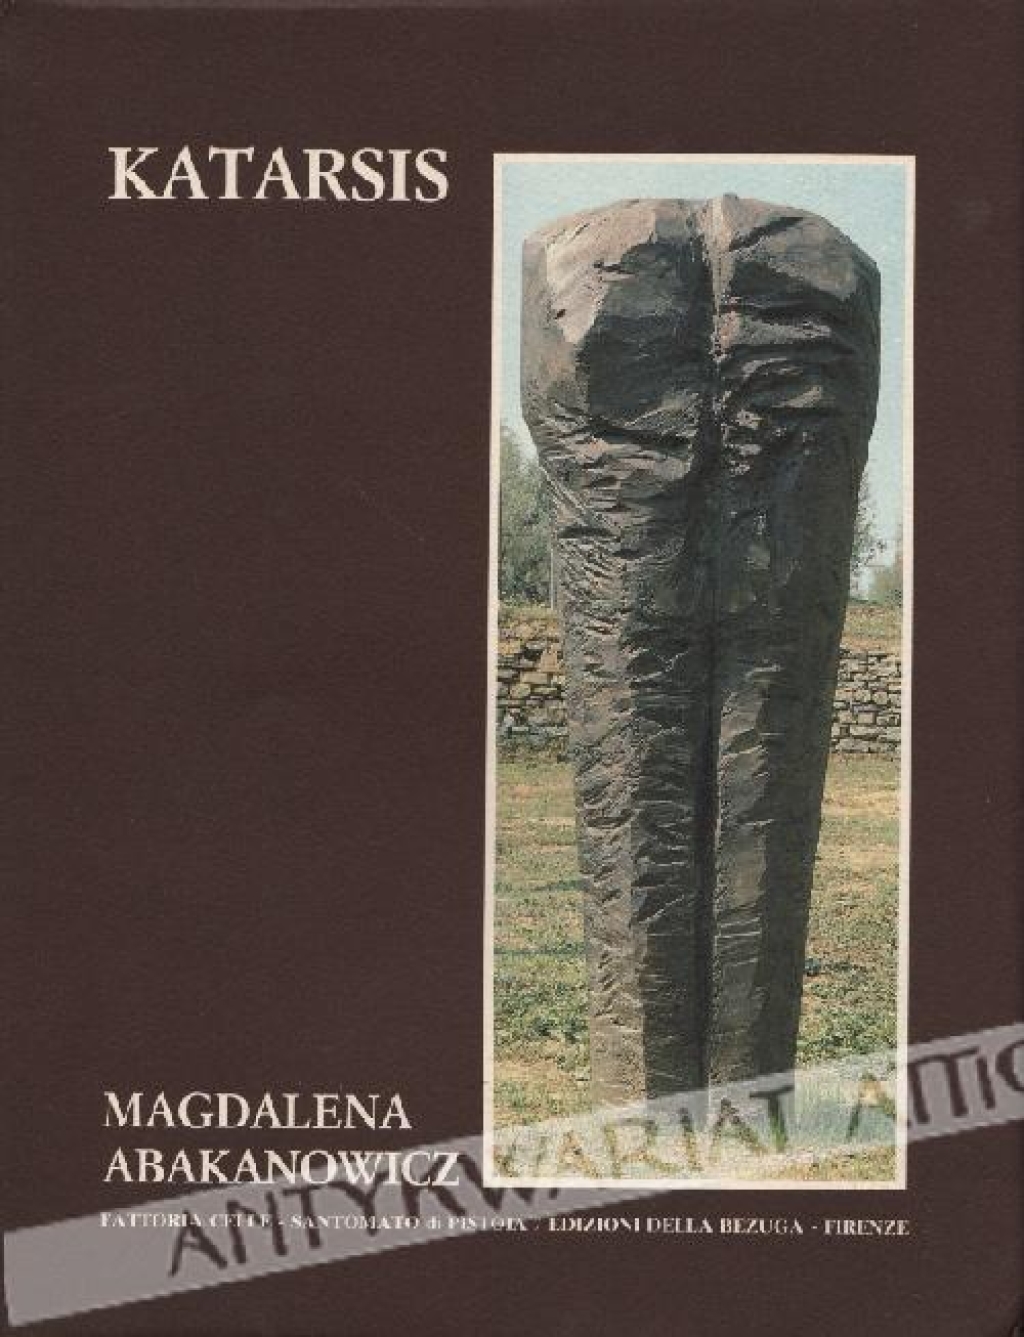 Katarsis  [text in Italian and English]